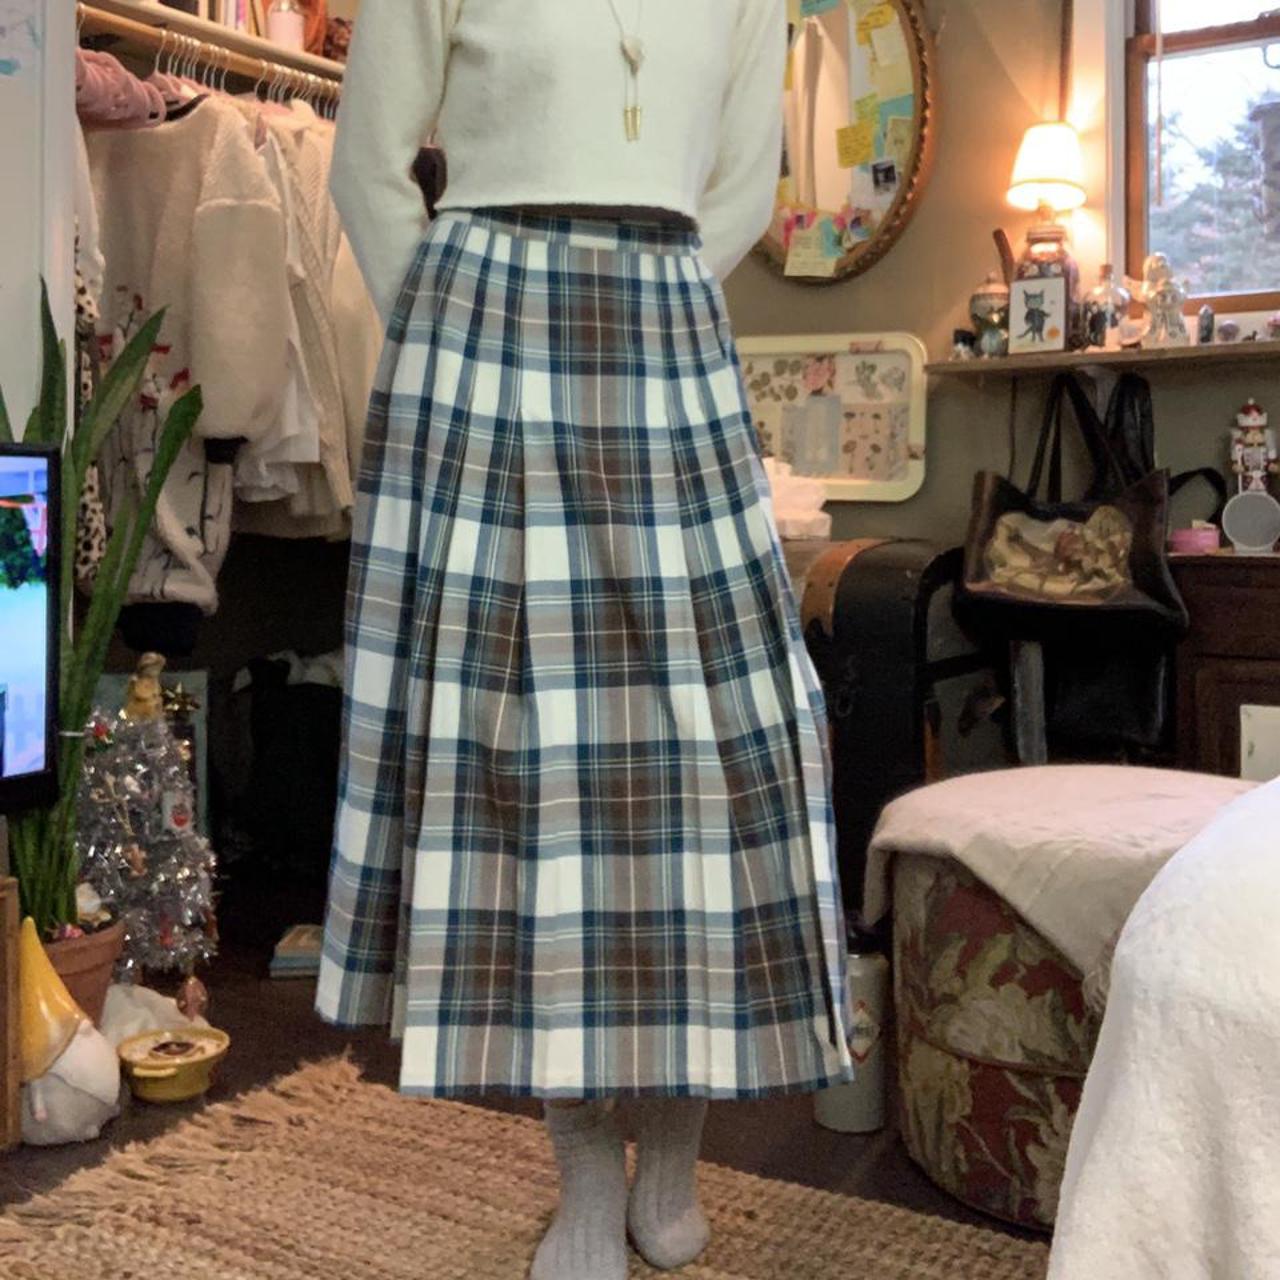 Product Image 1 - Pleated Pendleton style skirt 🐇

Hasting